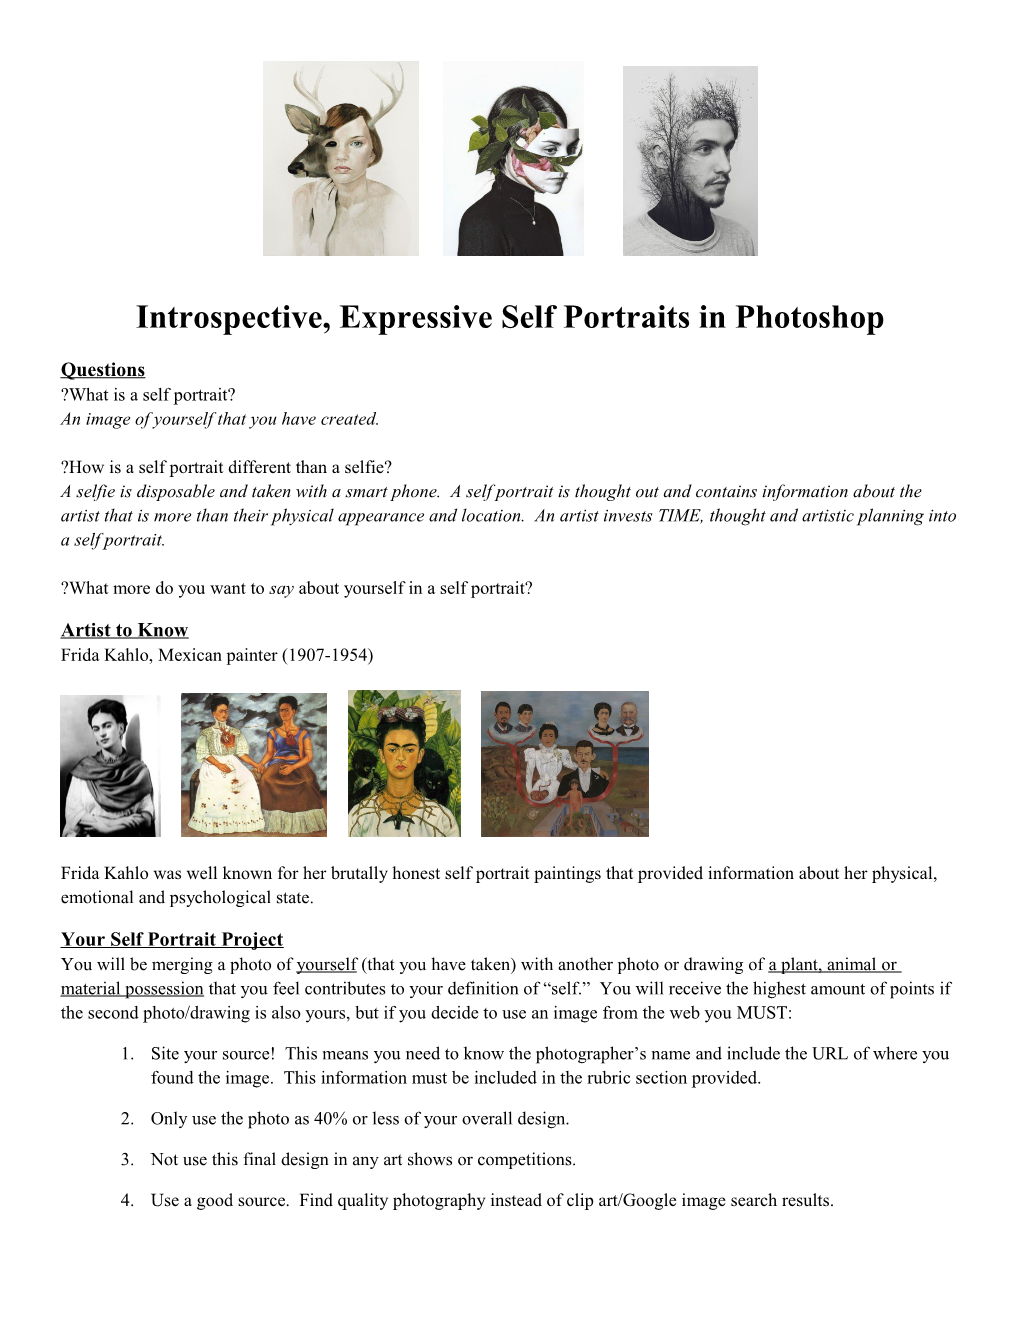 Introspective, Expressive Self Portraits in Photoshop